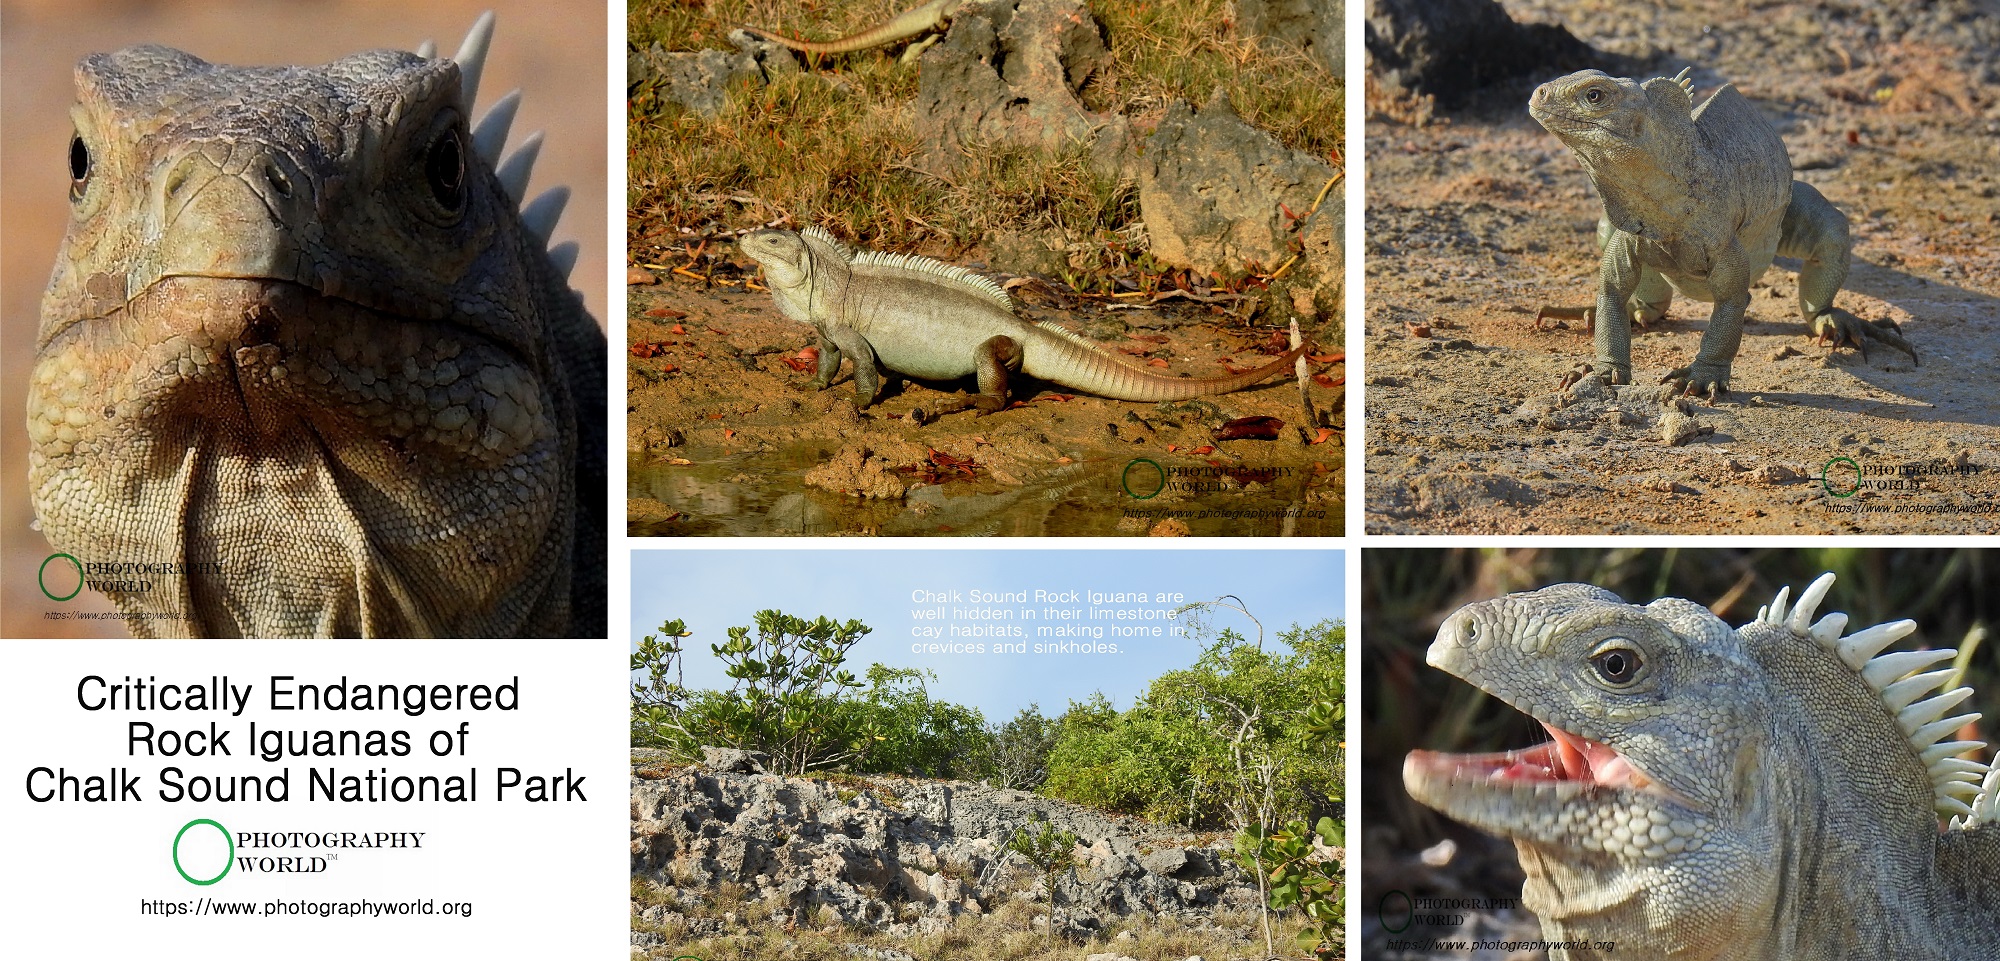 © Critically Endangered Rock Iguana of Chalk Sound National Park